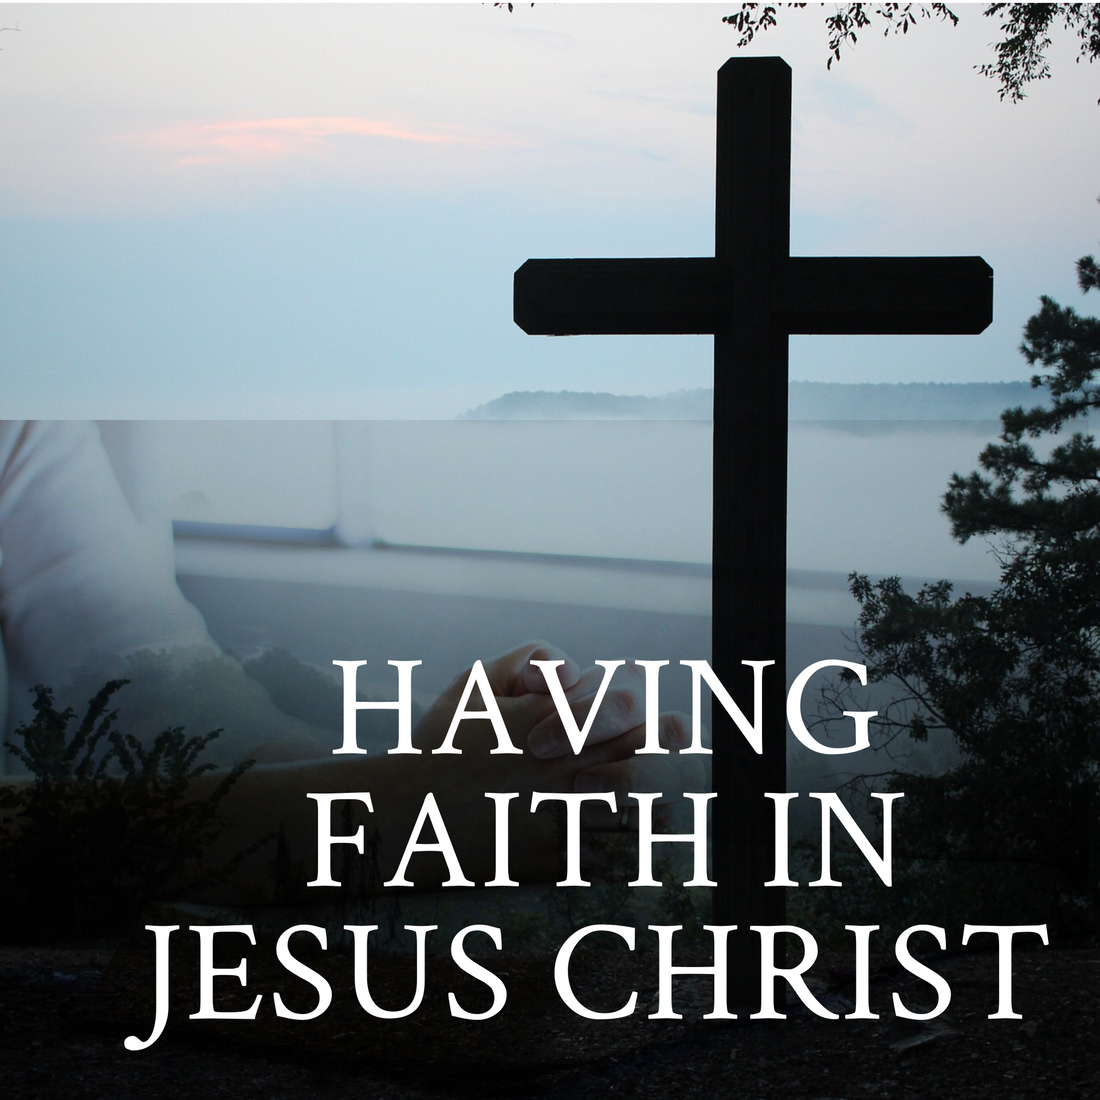 Having faith In Jesus Christ